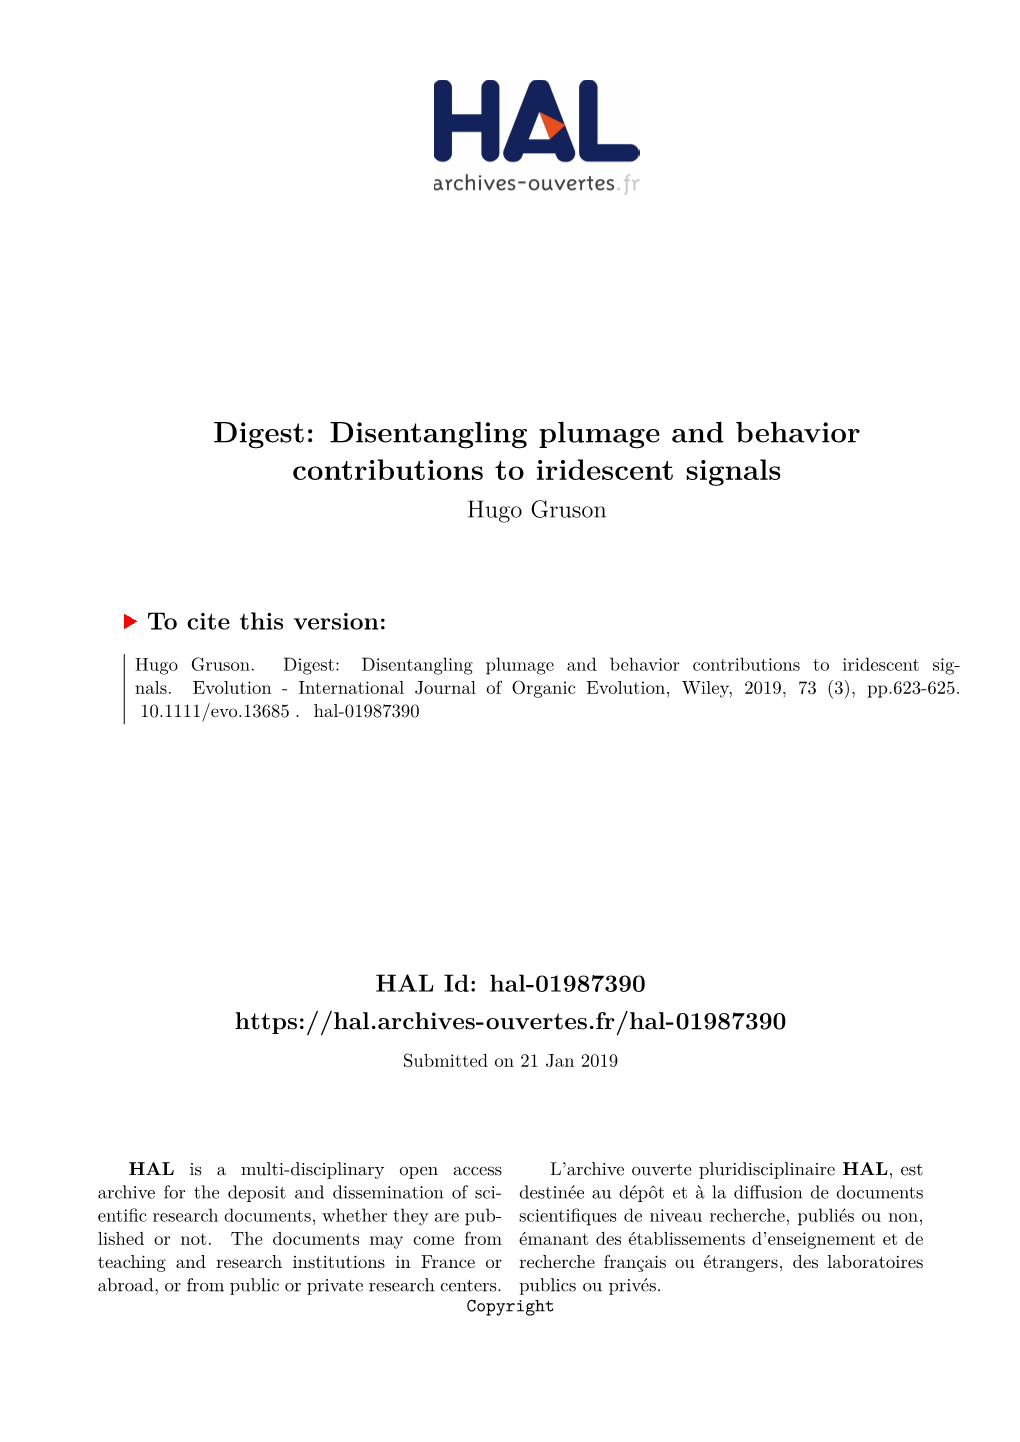 Disentangling Plumage and Behavior Contributions to Iridescent Signals Hugo Gruson